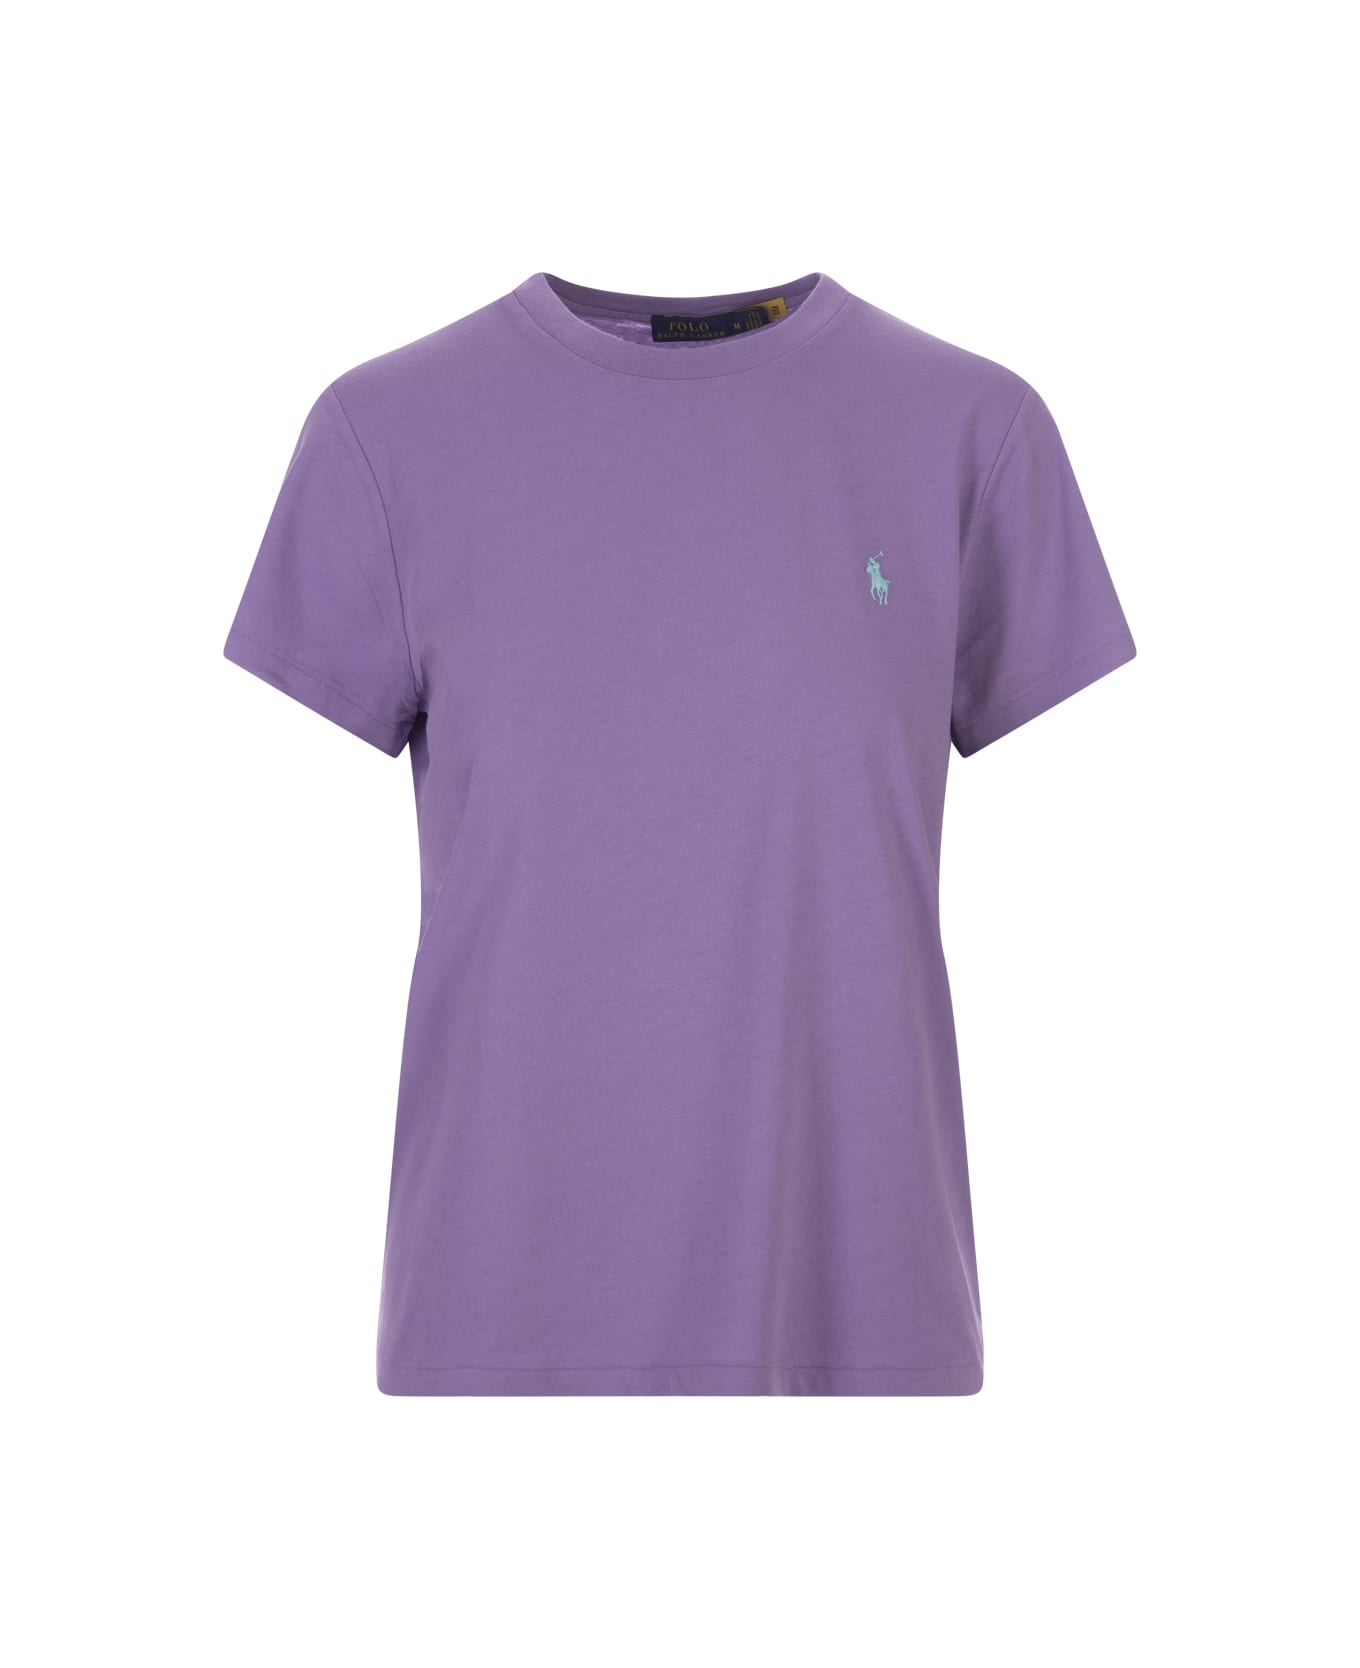 Ralph Lauren Purple T-shirt With Contrasting Pony - Wisteria